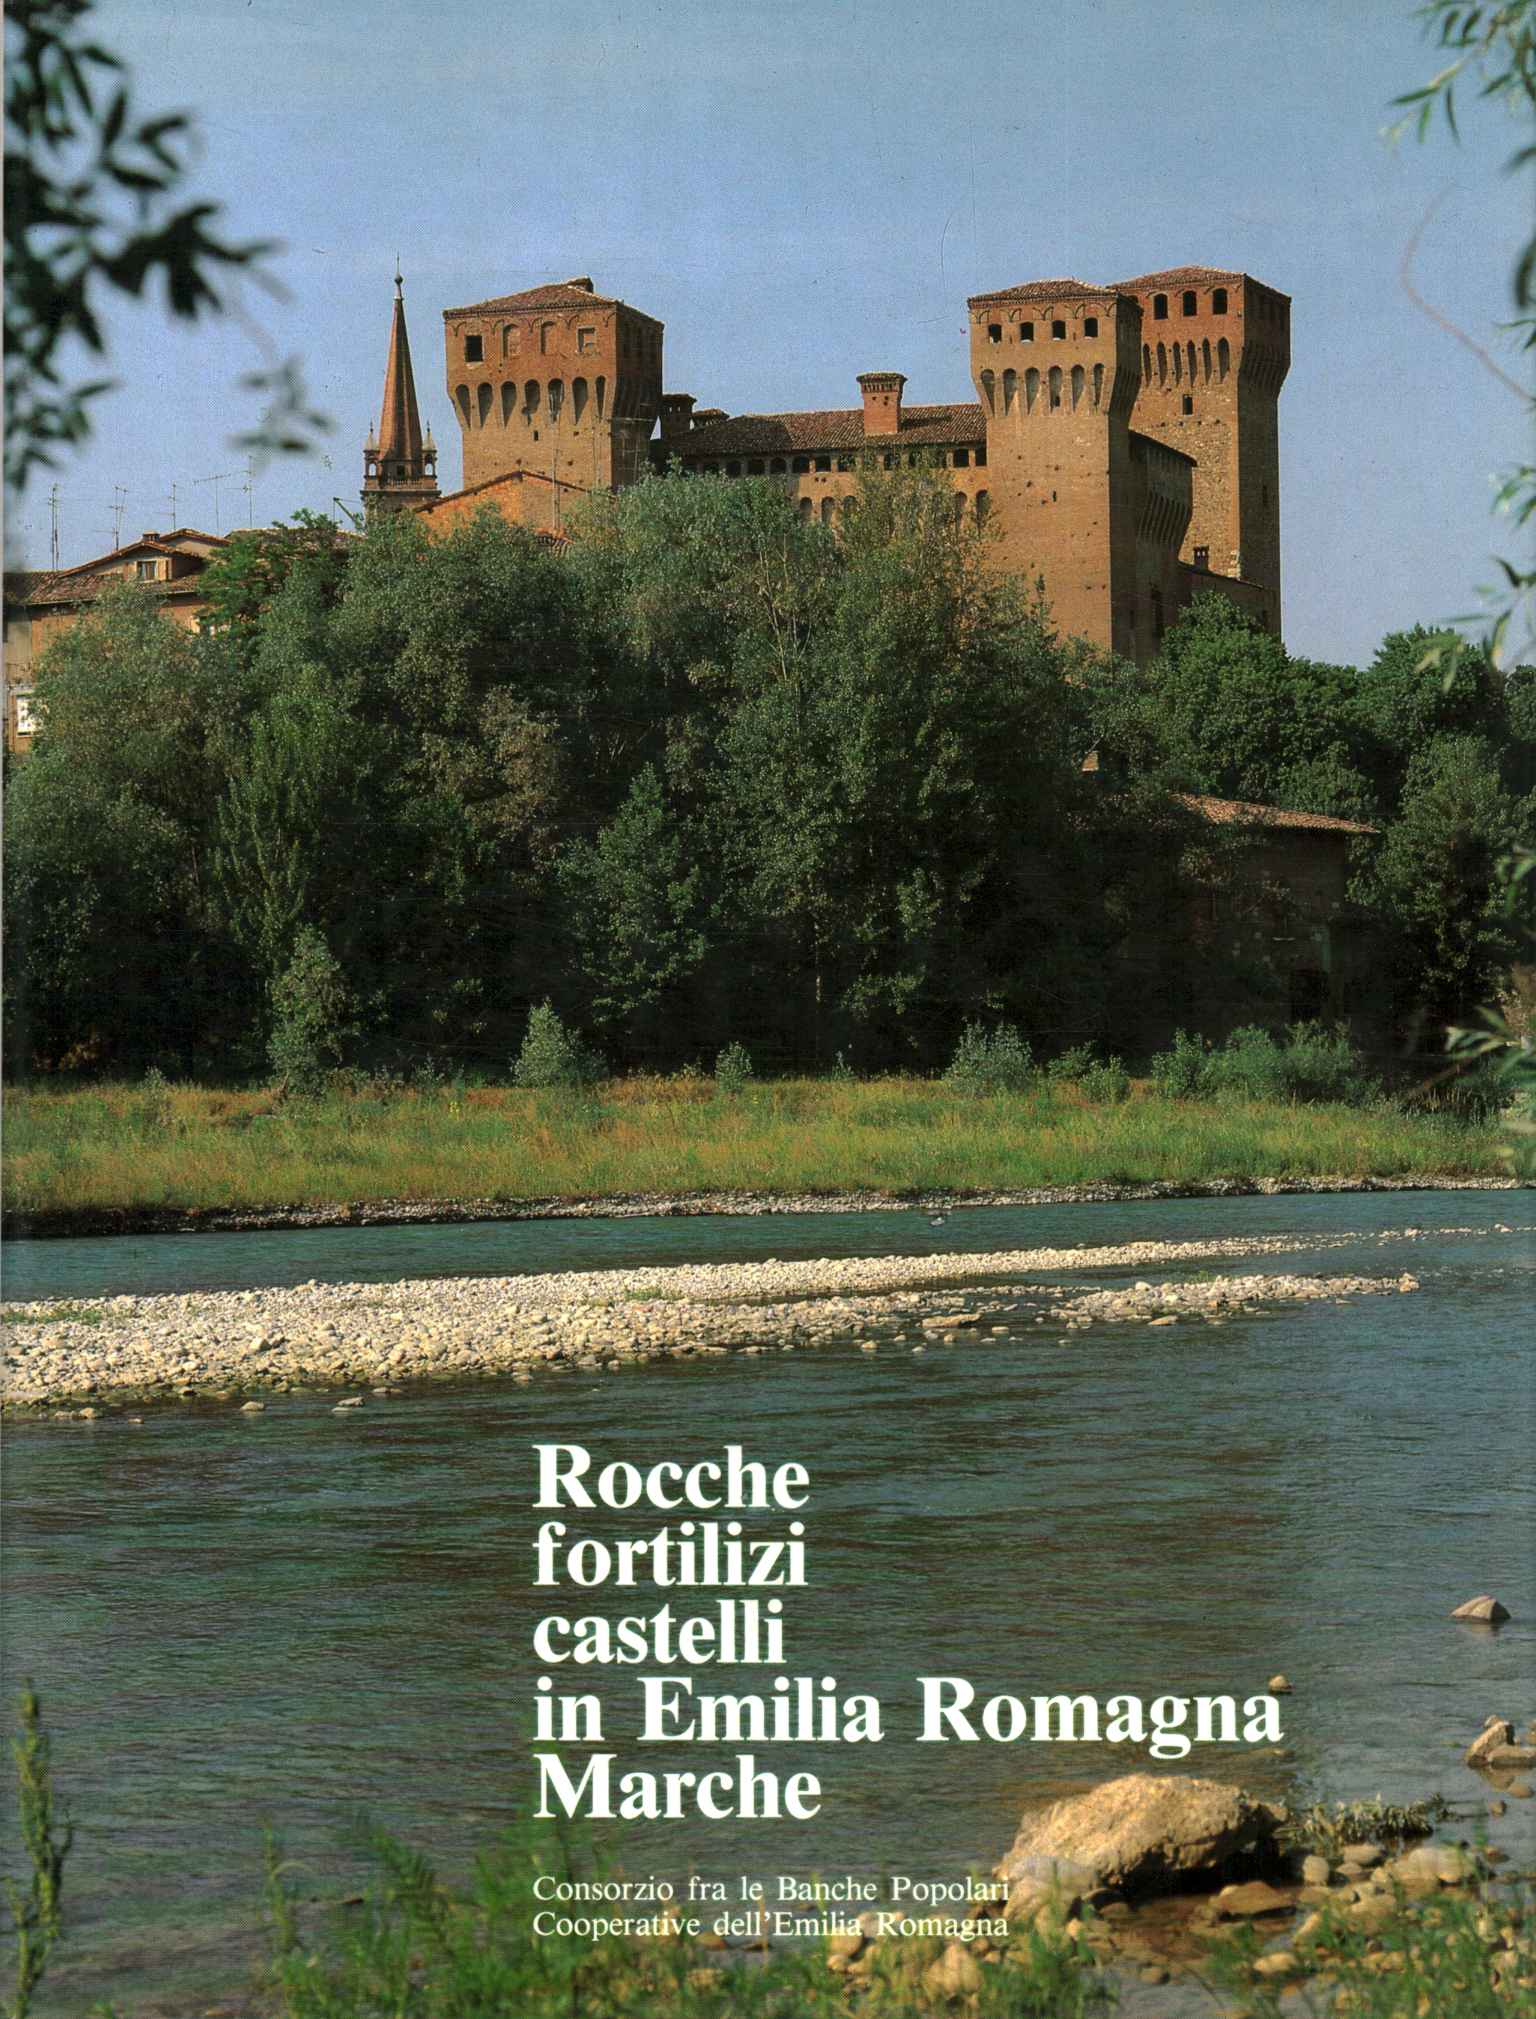 Castillos fortalezas en Emilia Roma